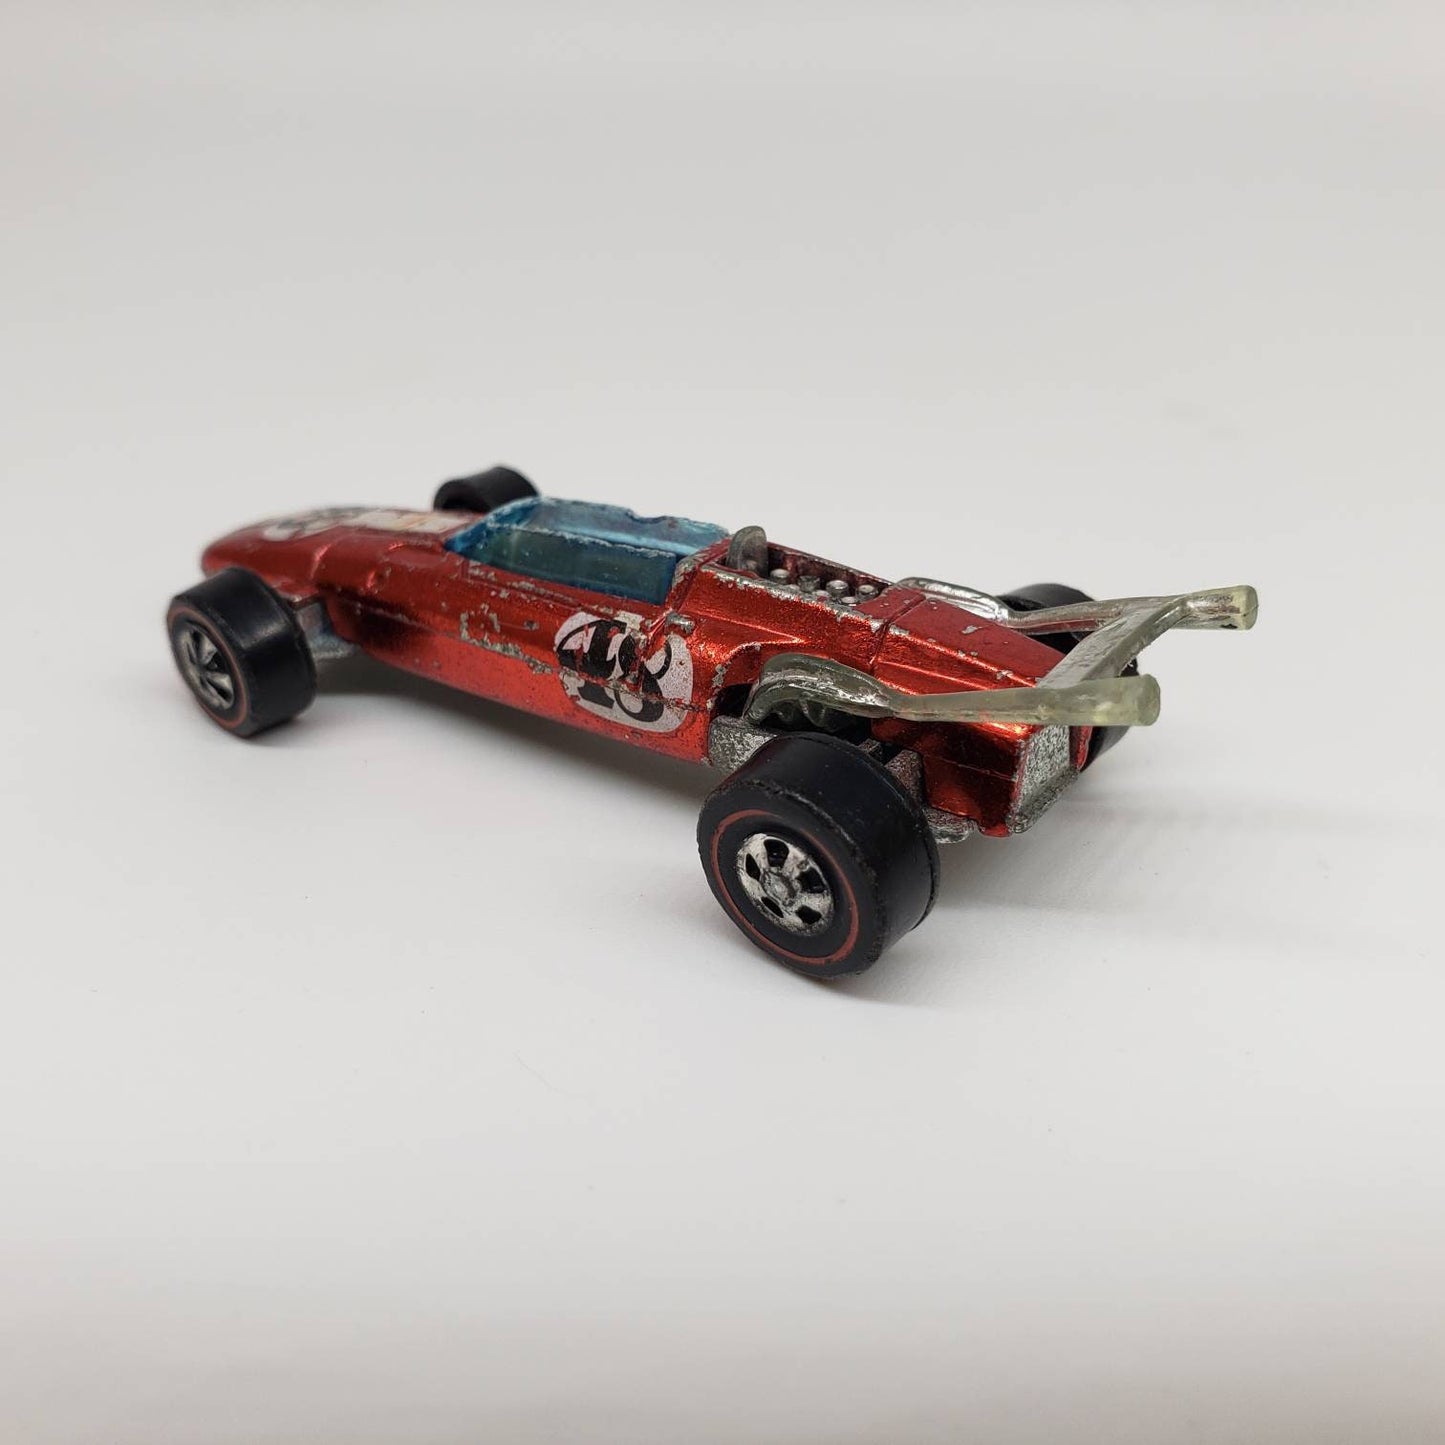 Redline Hot Wheels Indy Eagle Spectraflame Orange Diecast Metal Collectible Vintage Hot Wheels Scale Miniature Model Toy Car